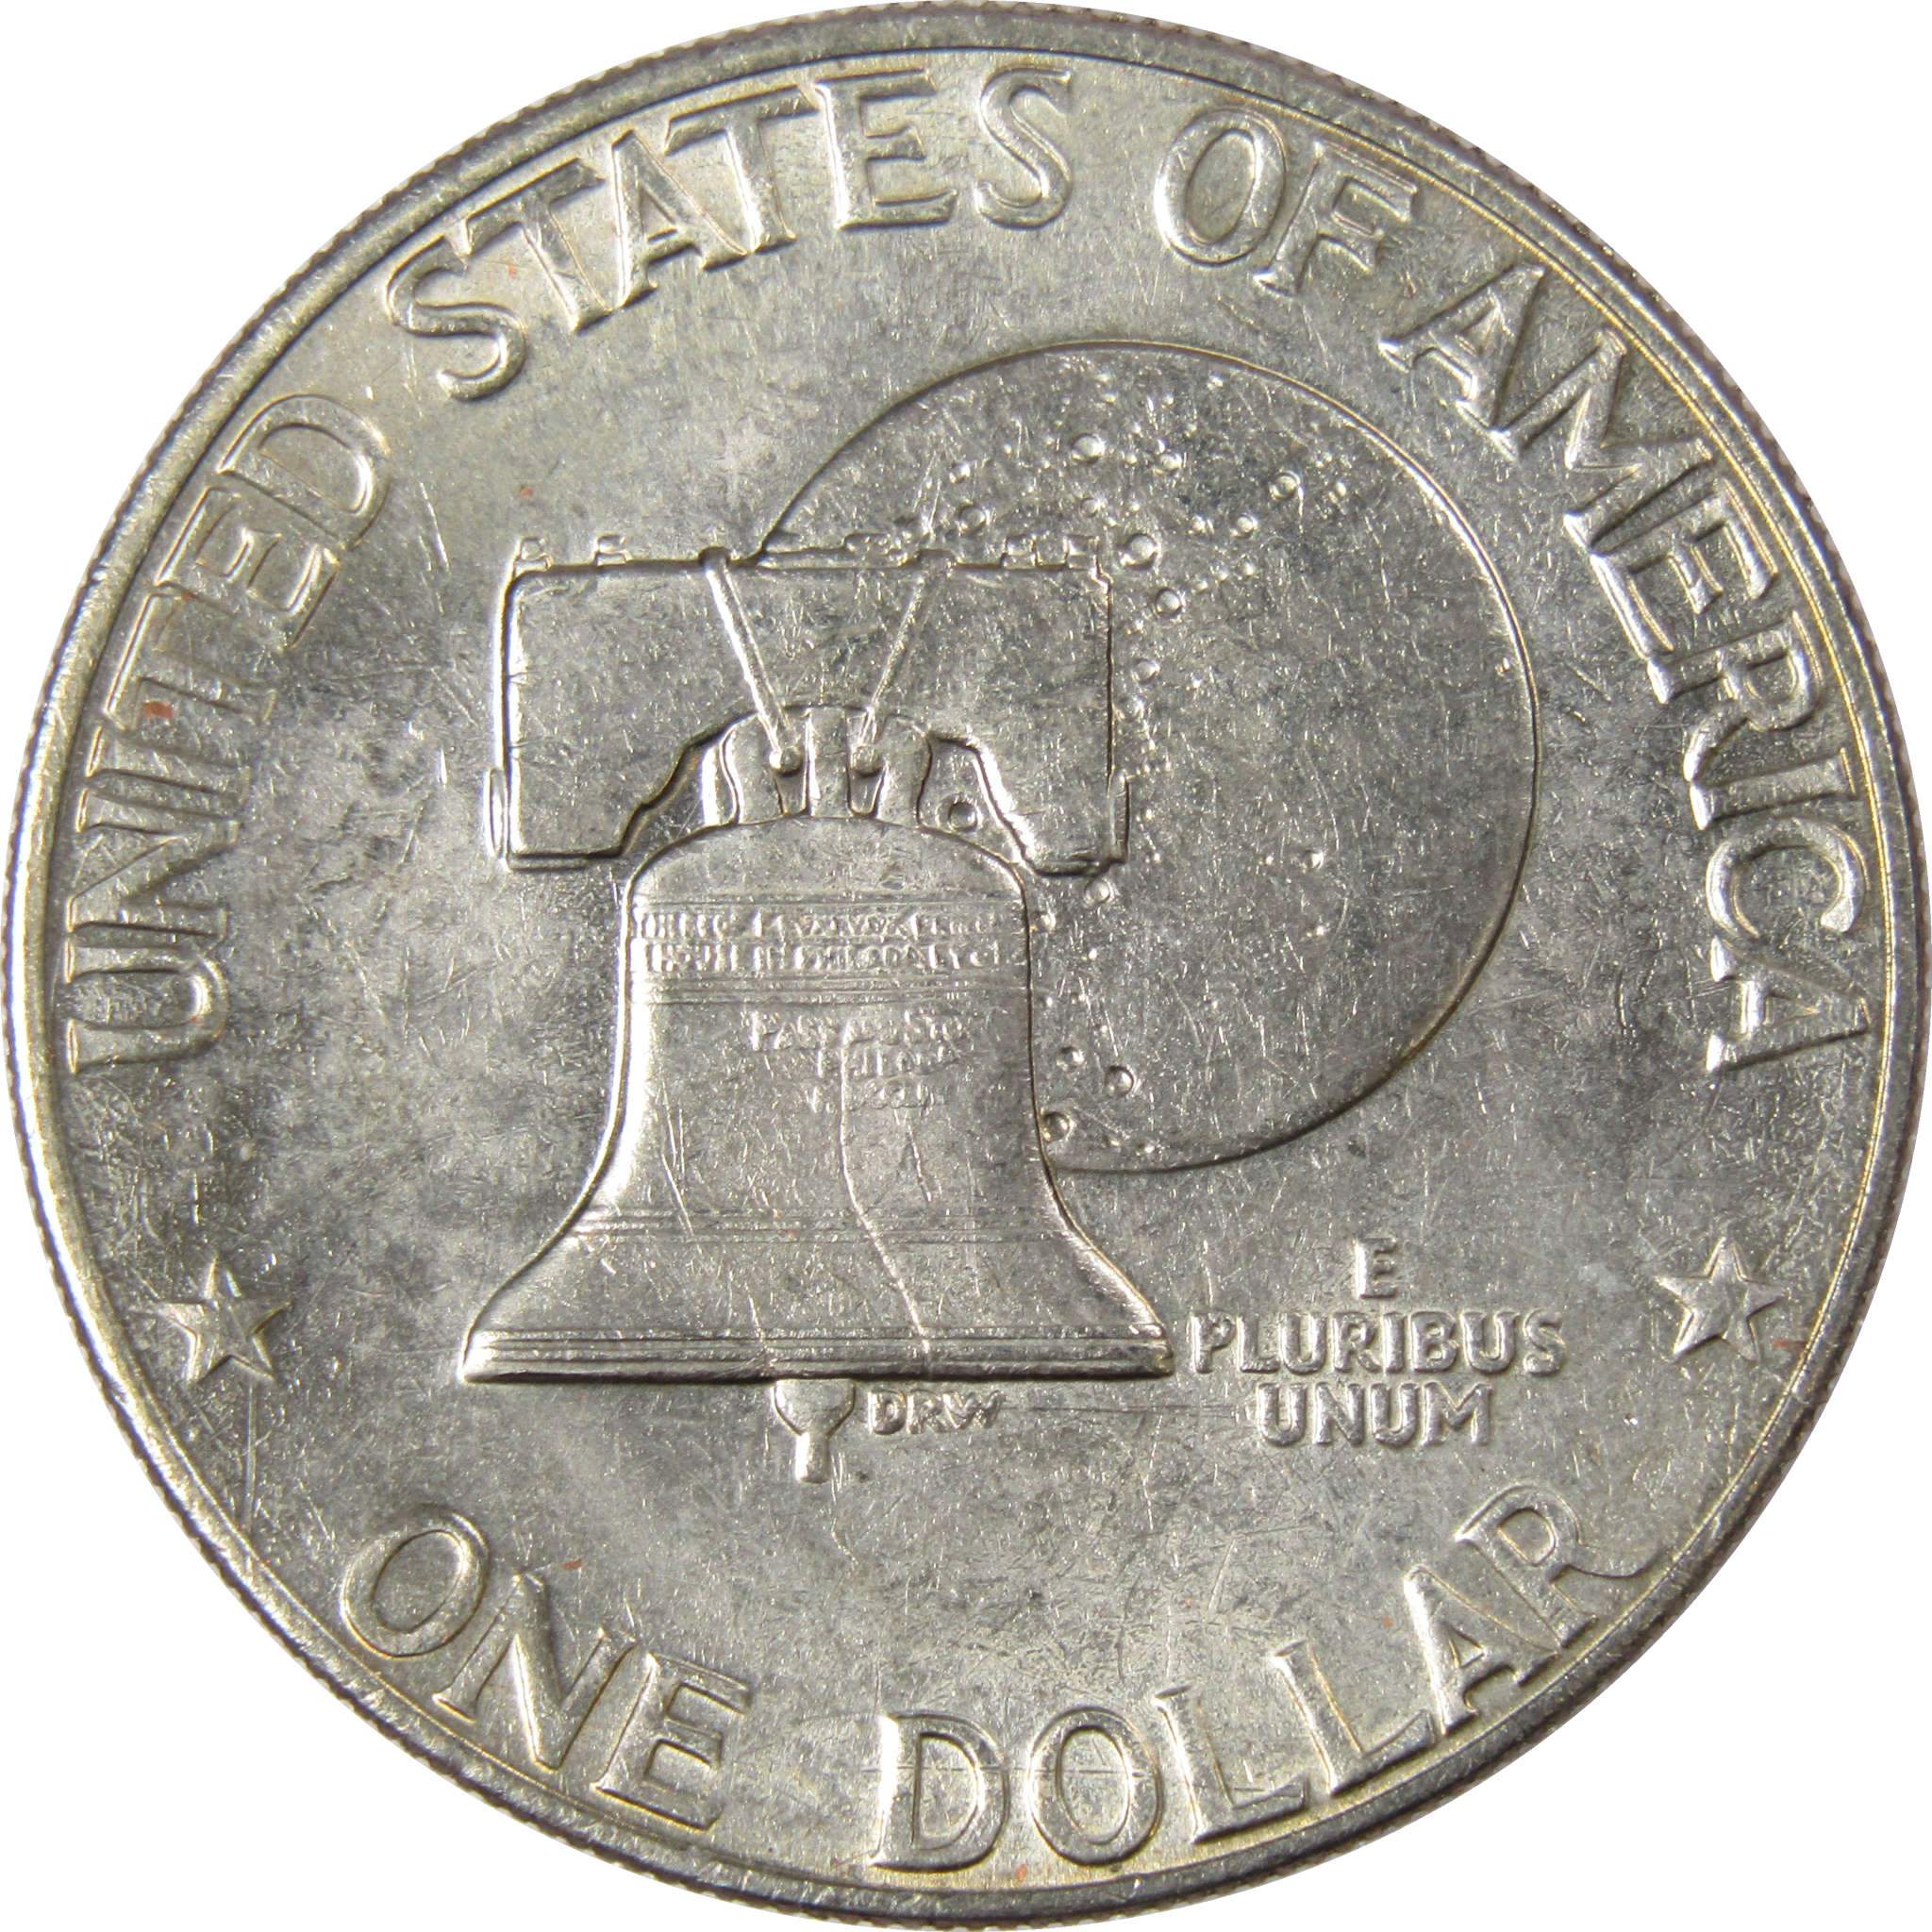 1976 Type 2 Eisenhower Bicentennial Dollar BU Uncirculated Clad IKE $1 Coin